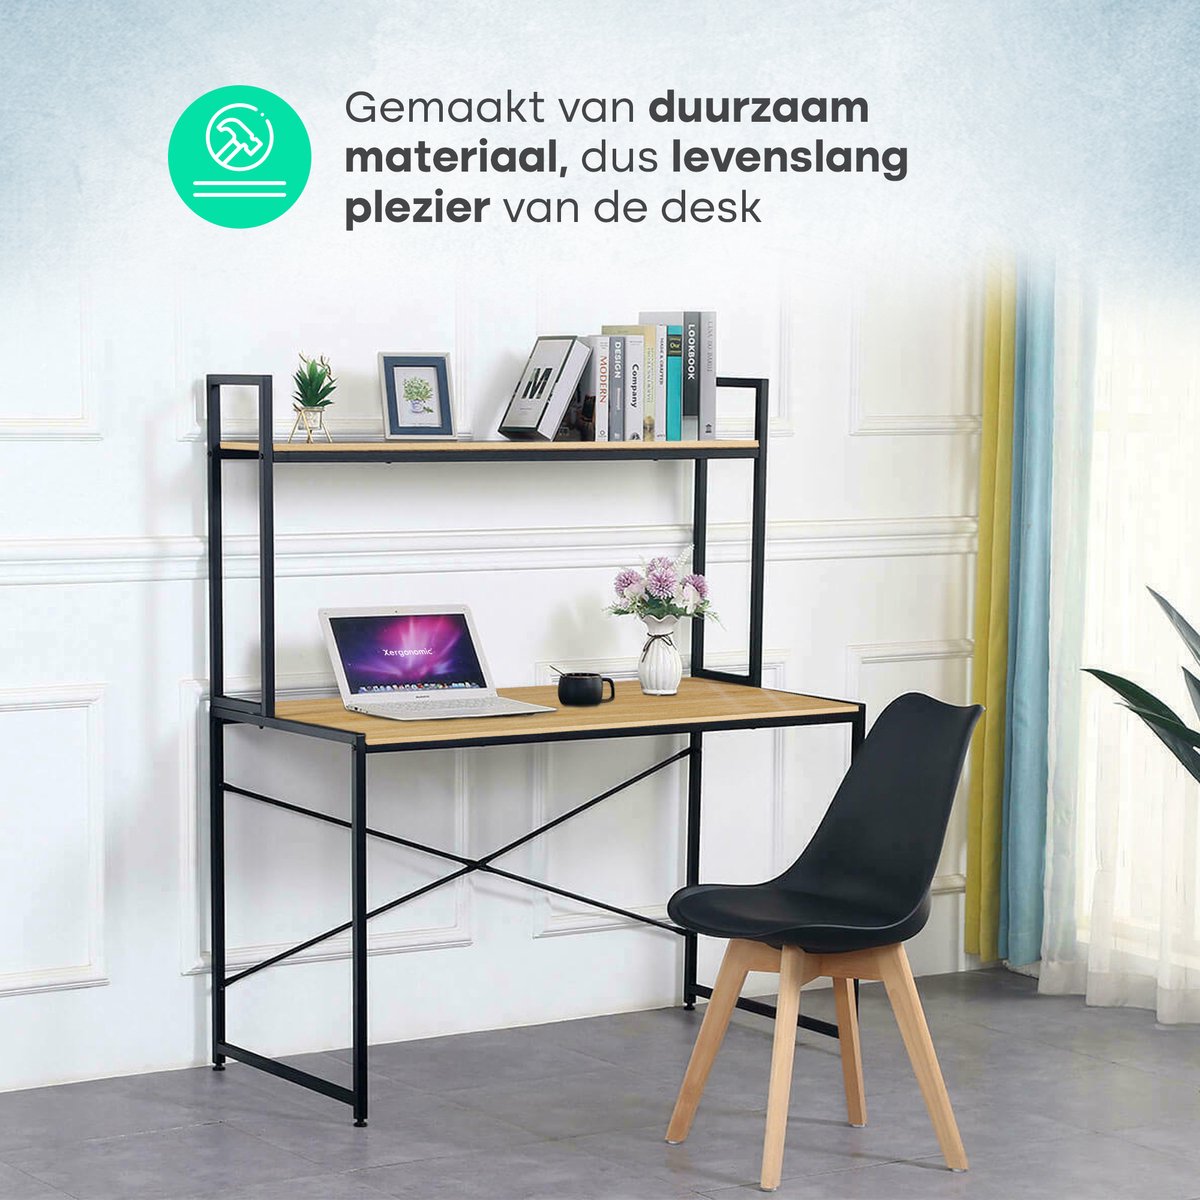 Xergonomic® Industrial desk with shelf